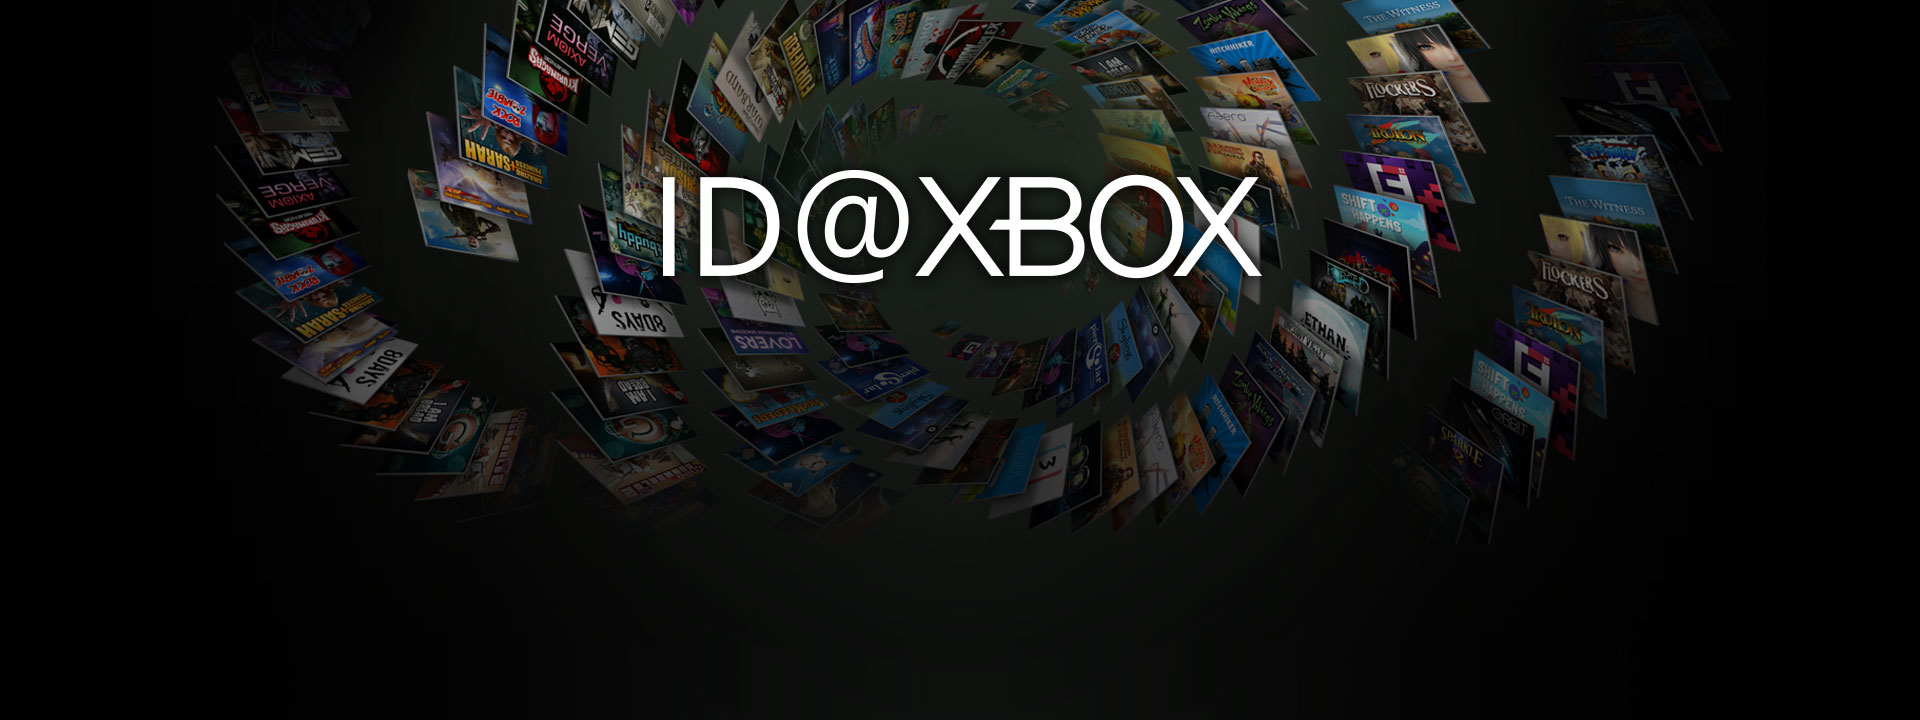 ID at Xbox 標誌在 ID 遊戲的包裝圖收藏前方